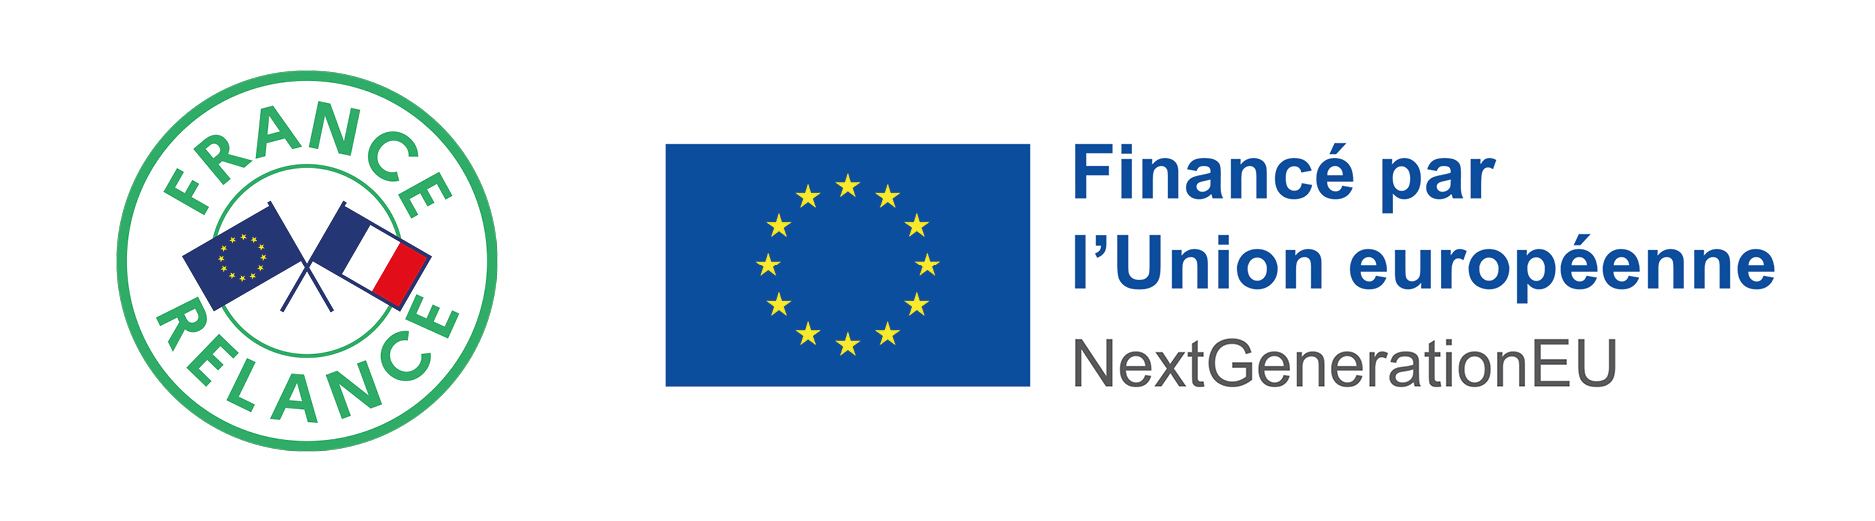 Logo france relance europe